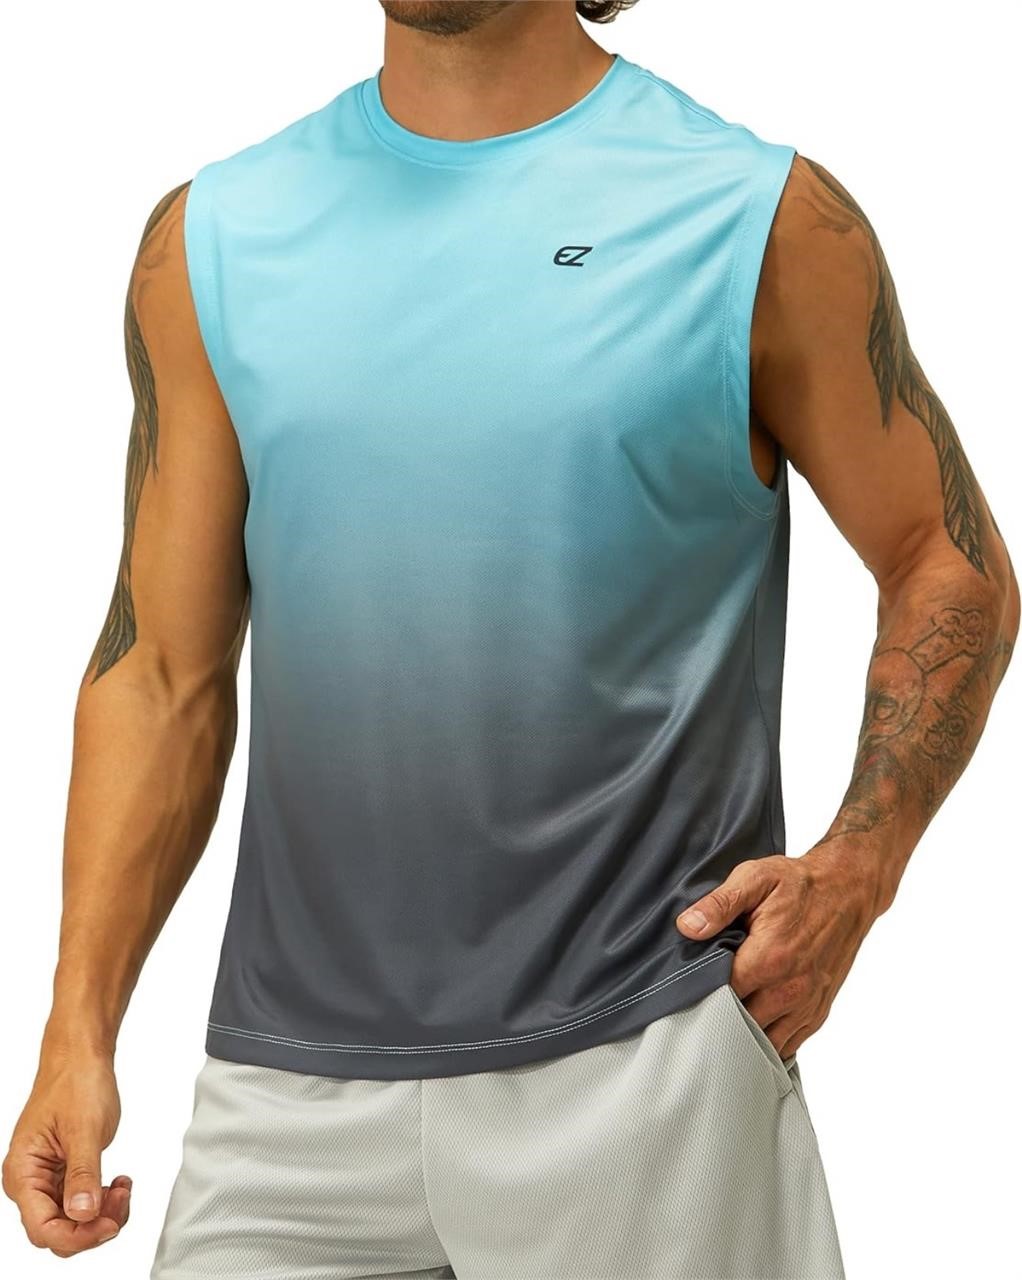 ($28) EZRUN Men's Workout Sleeveless Shirts,M